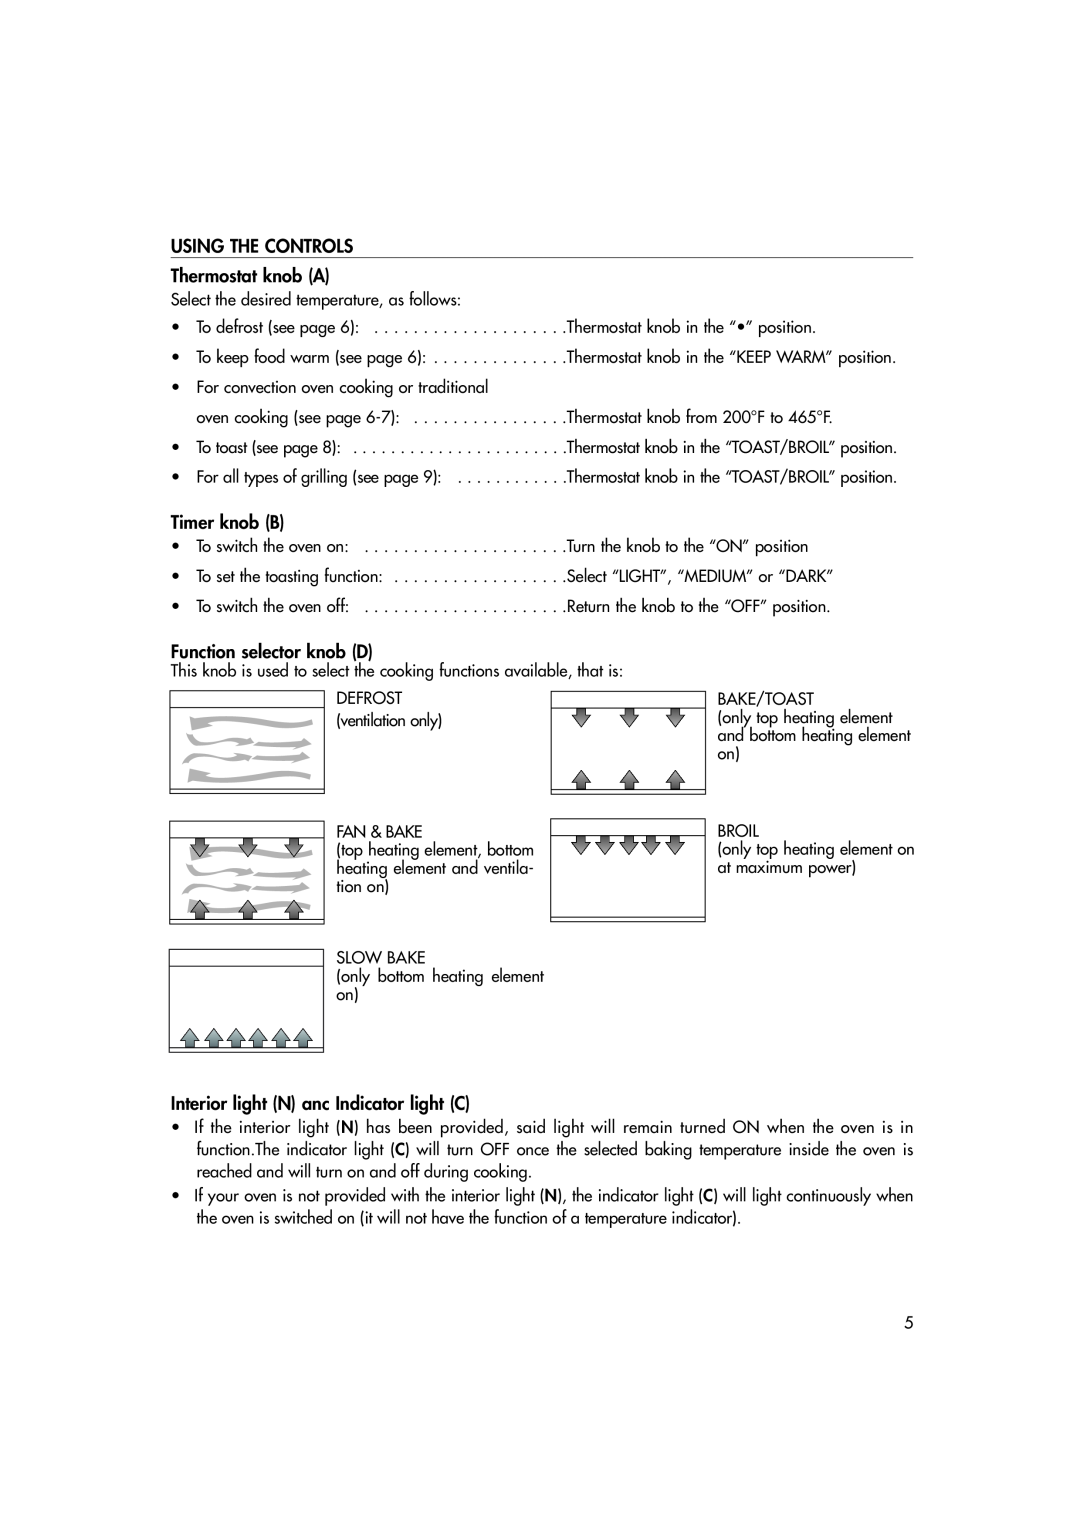 DeLonghi EO1270 B manual USING THE CONTROLS Thermostat knob A, Timer knob B, Function selector knob D 